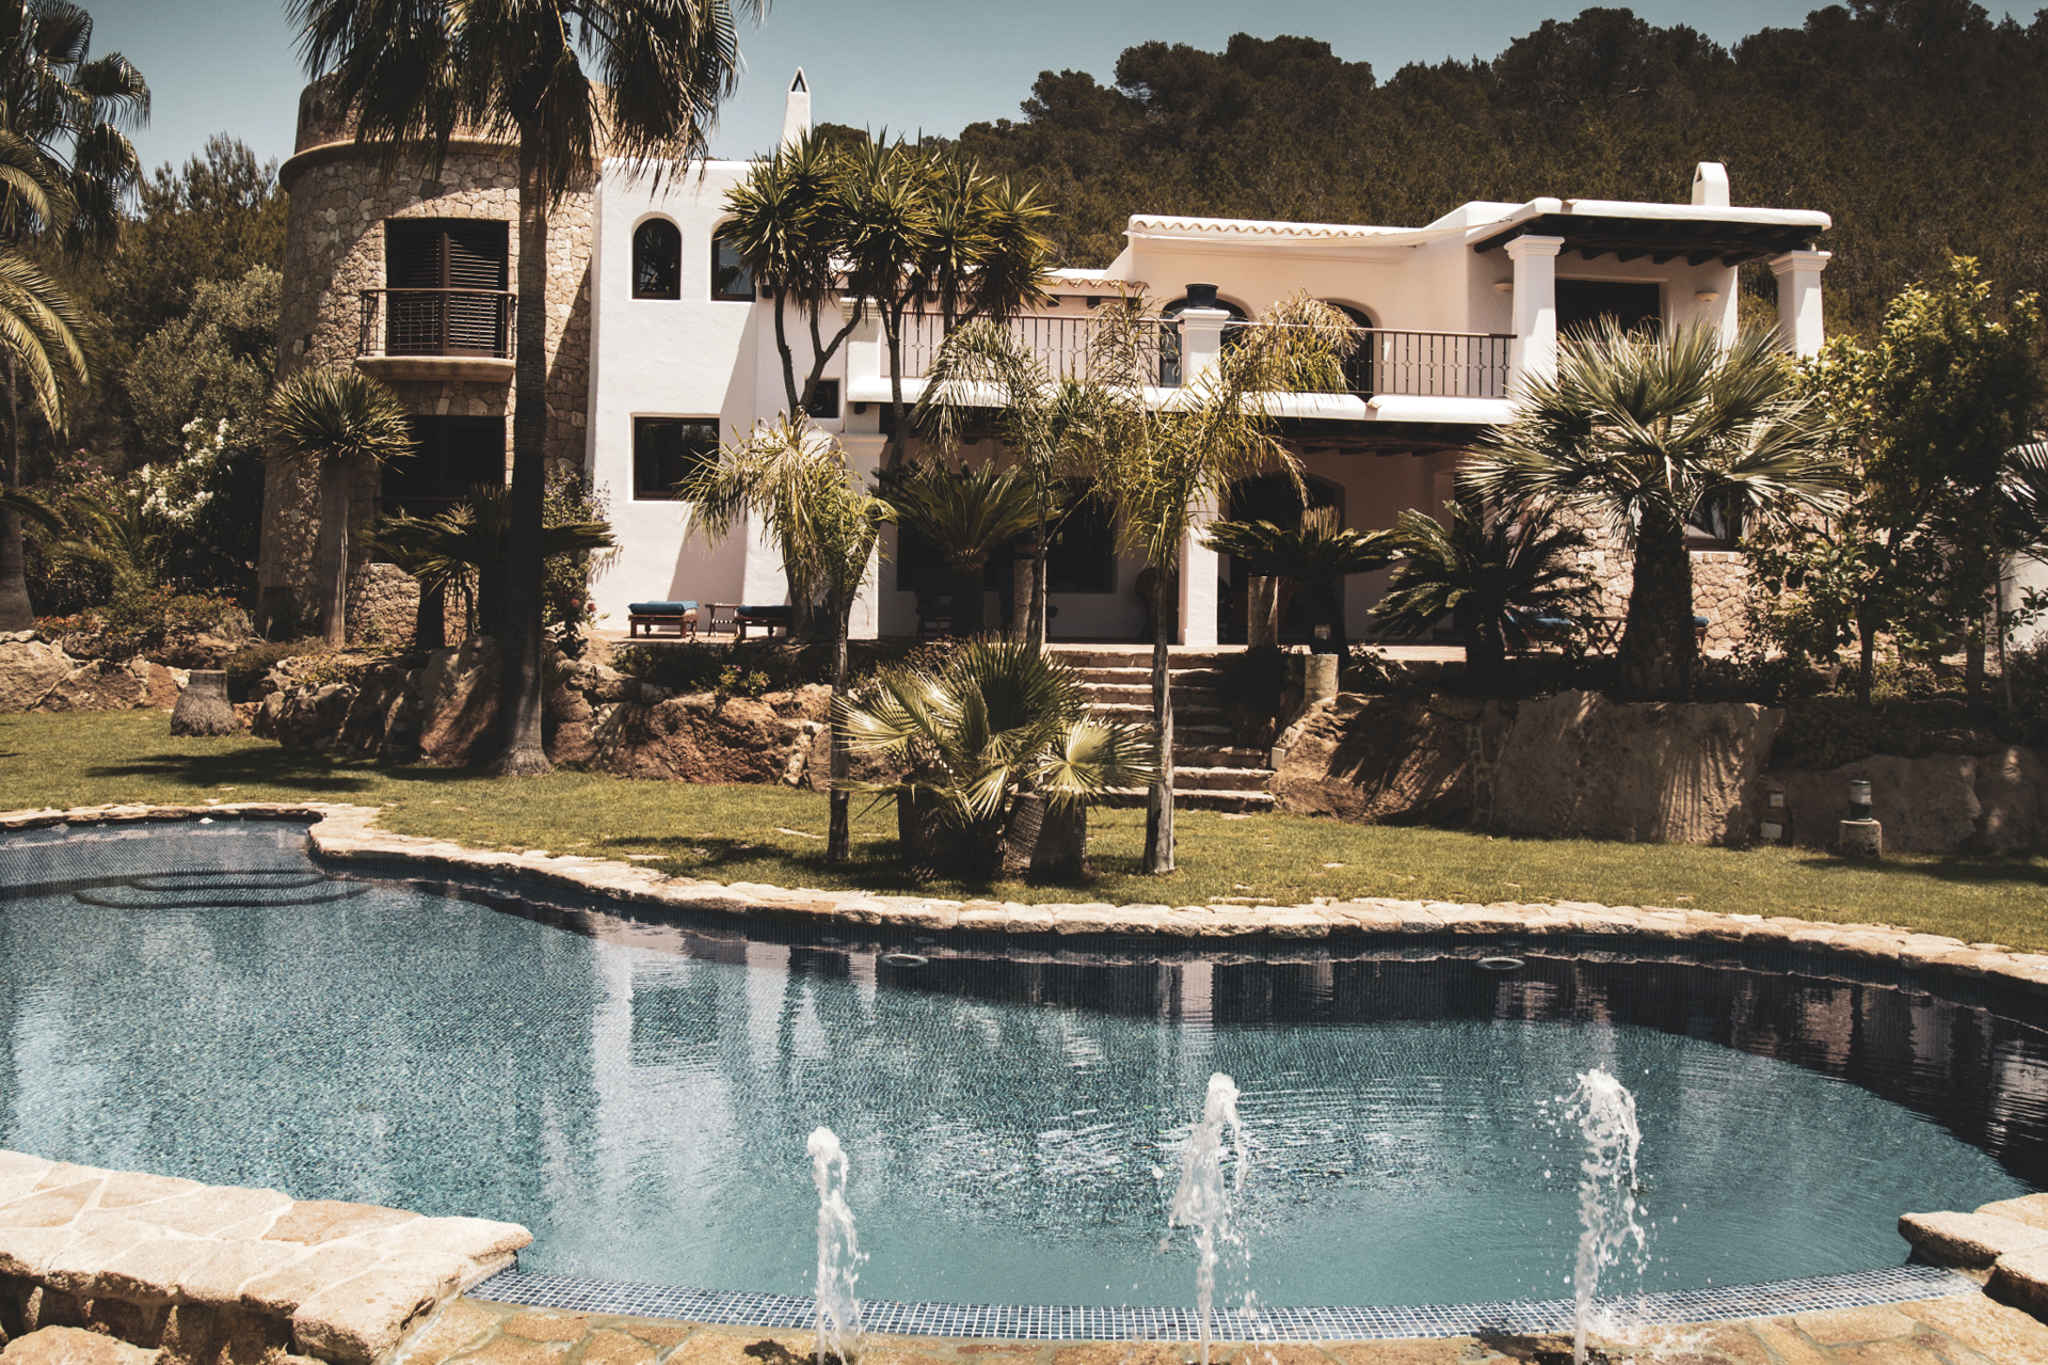 Villas in Ibiza that Sleep 12+ People